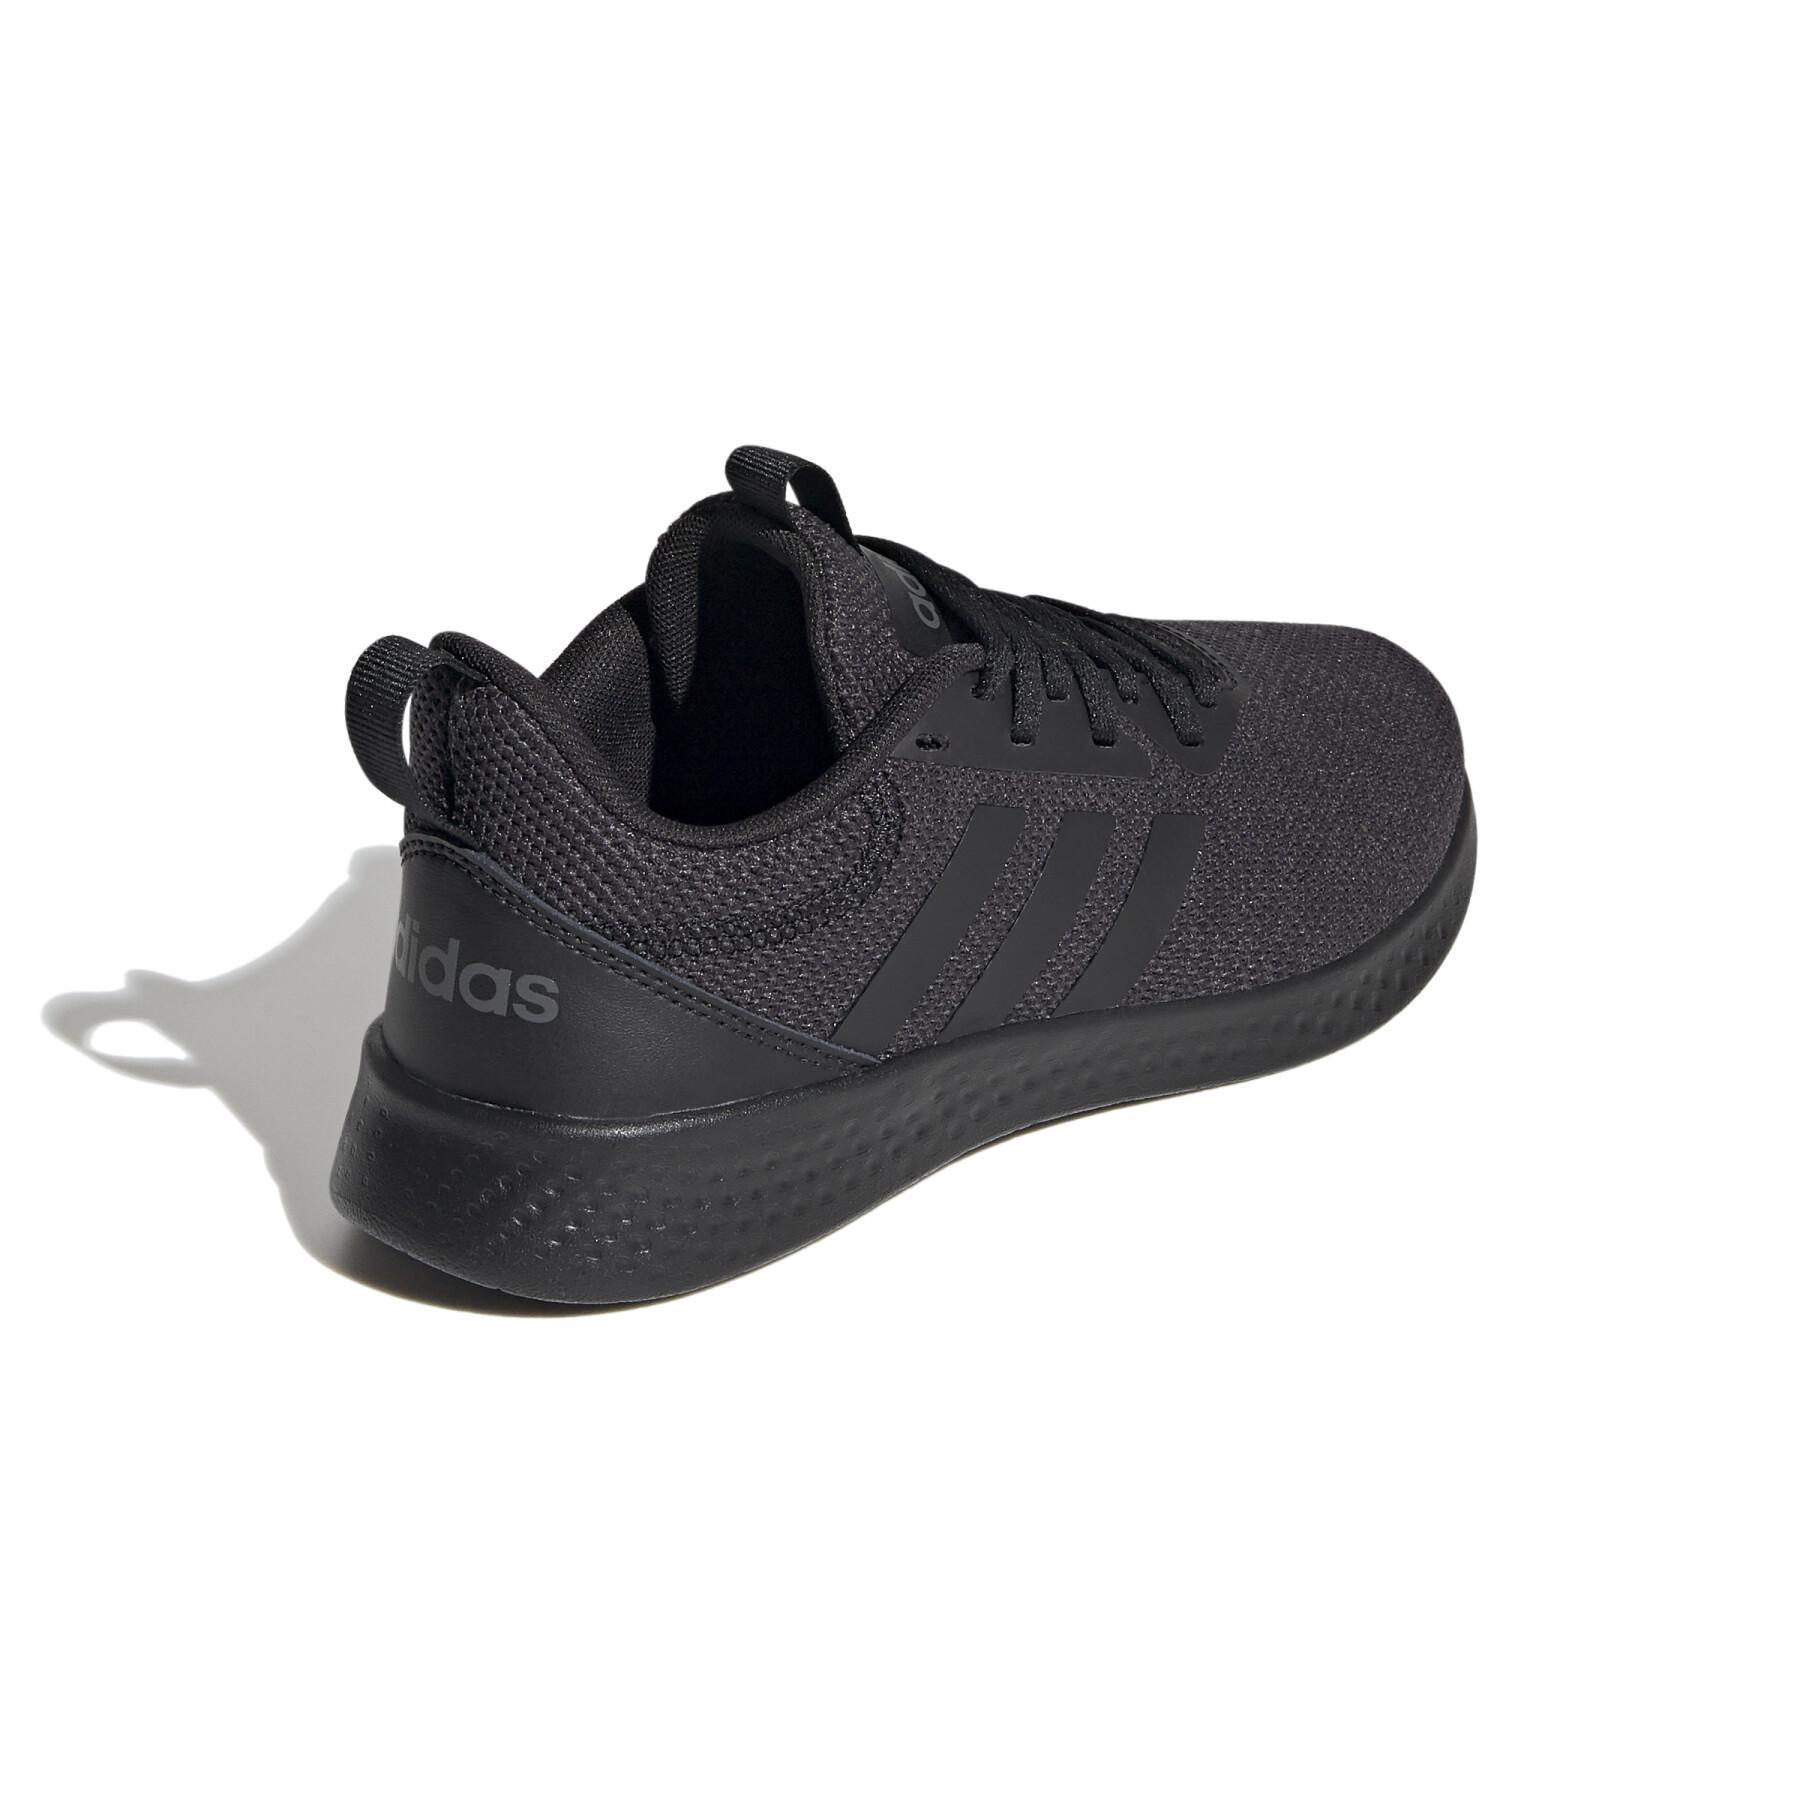 Children's sneakers adidas Puremotion